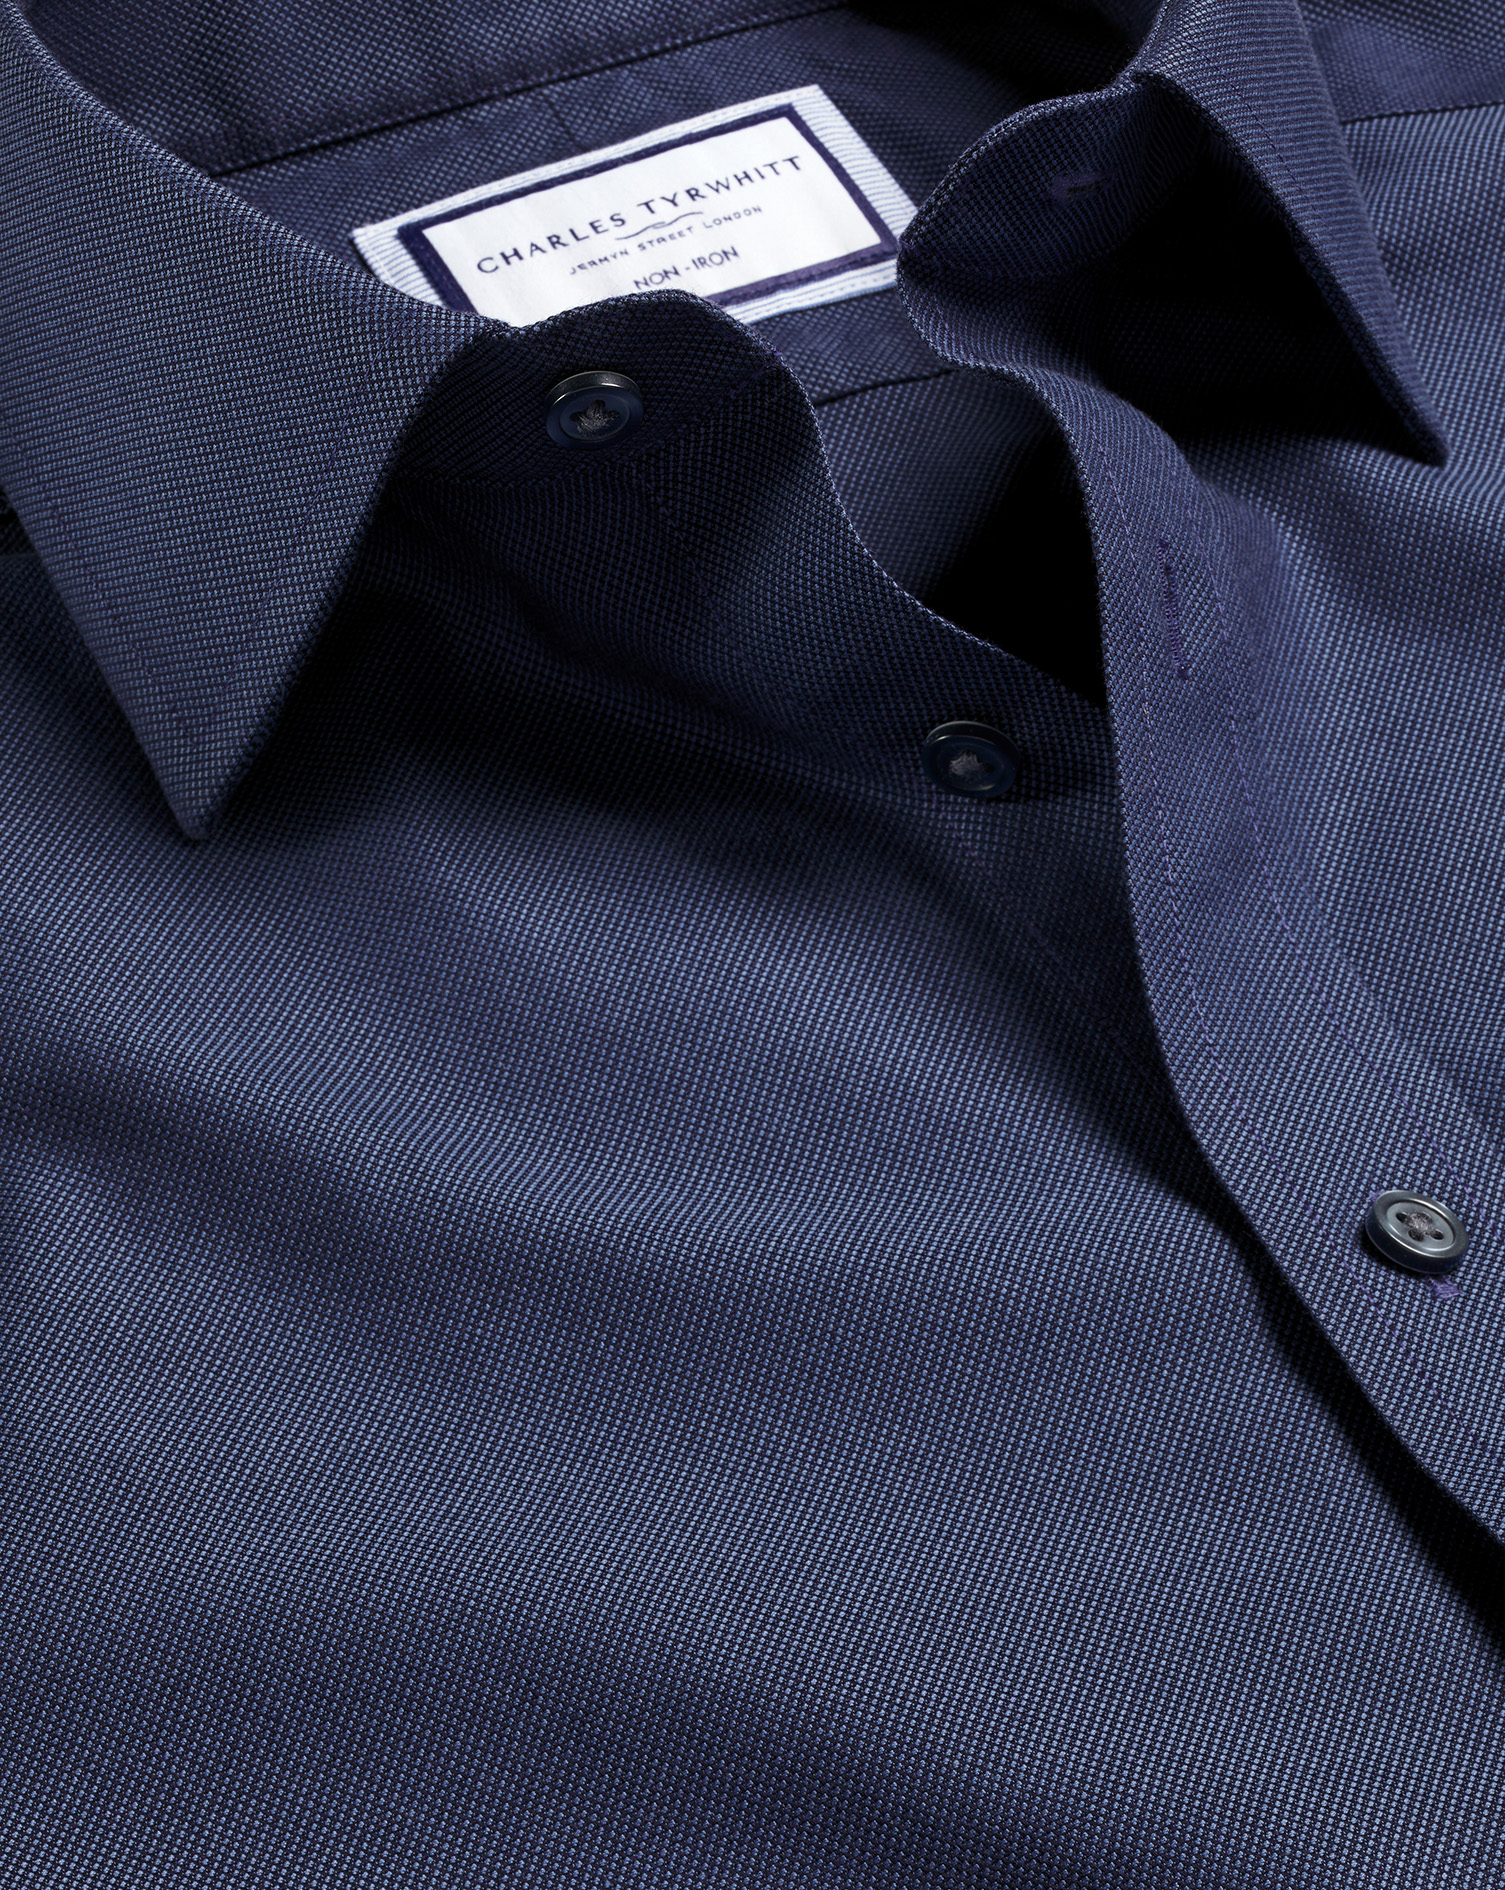 Men's Charles Tyrwhitt Non-Iron Royal Oxford Dress Shirt - French Blue Single Cuff Size 16/35 Cotton